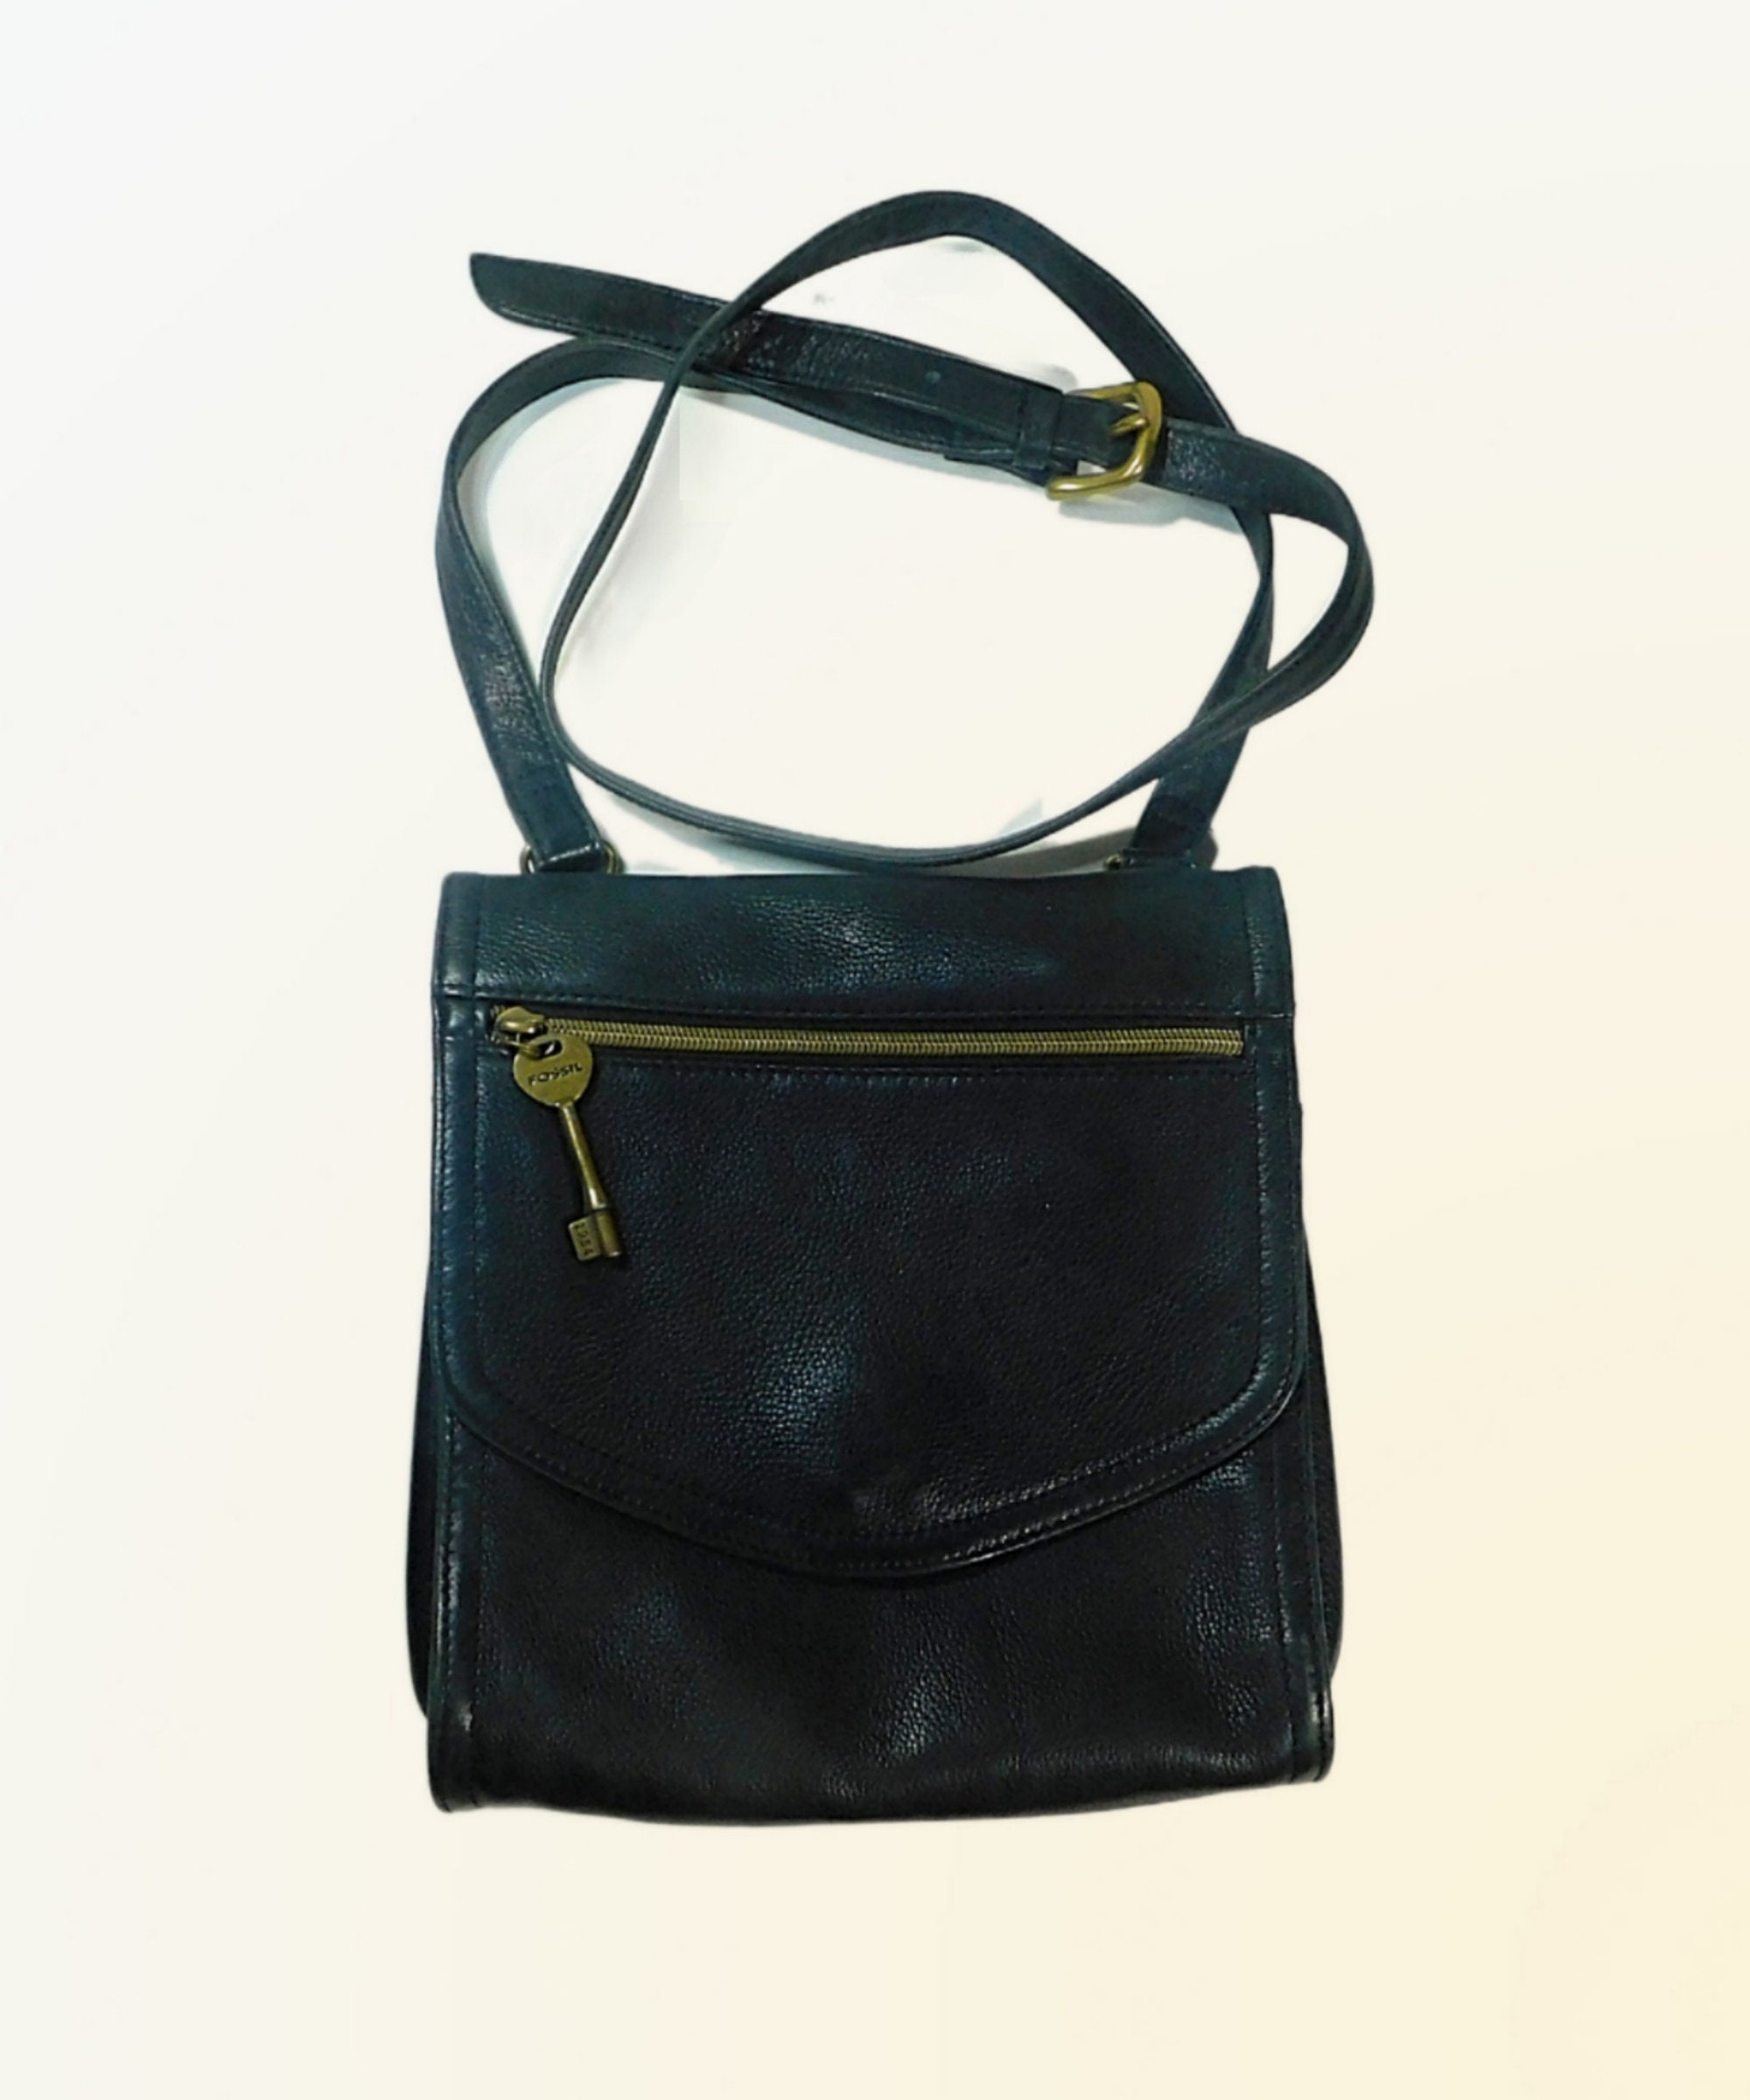 Soft black leather Fossil Issue No. 1954 crossbody shoulder purse handbag